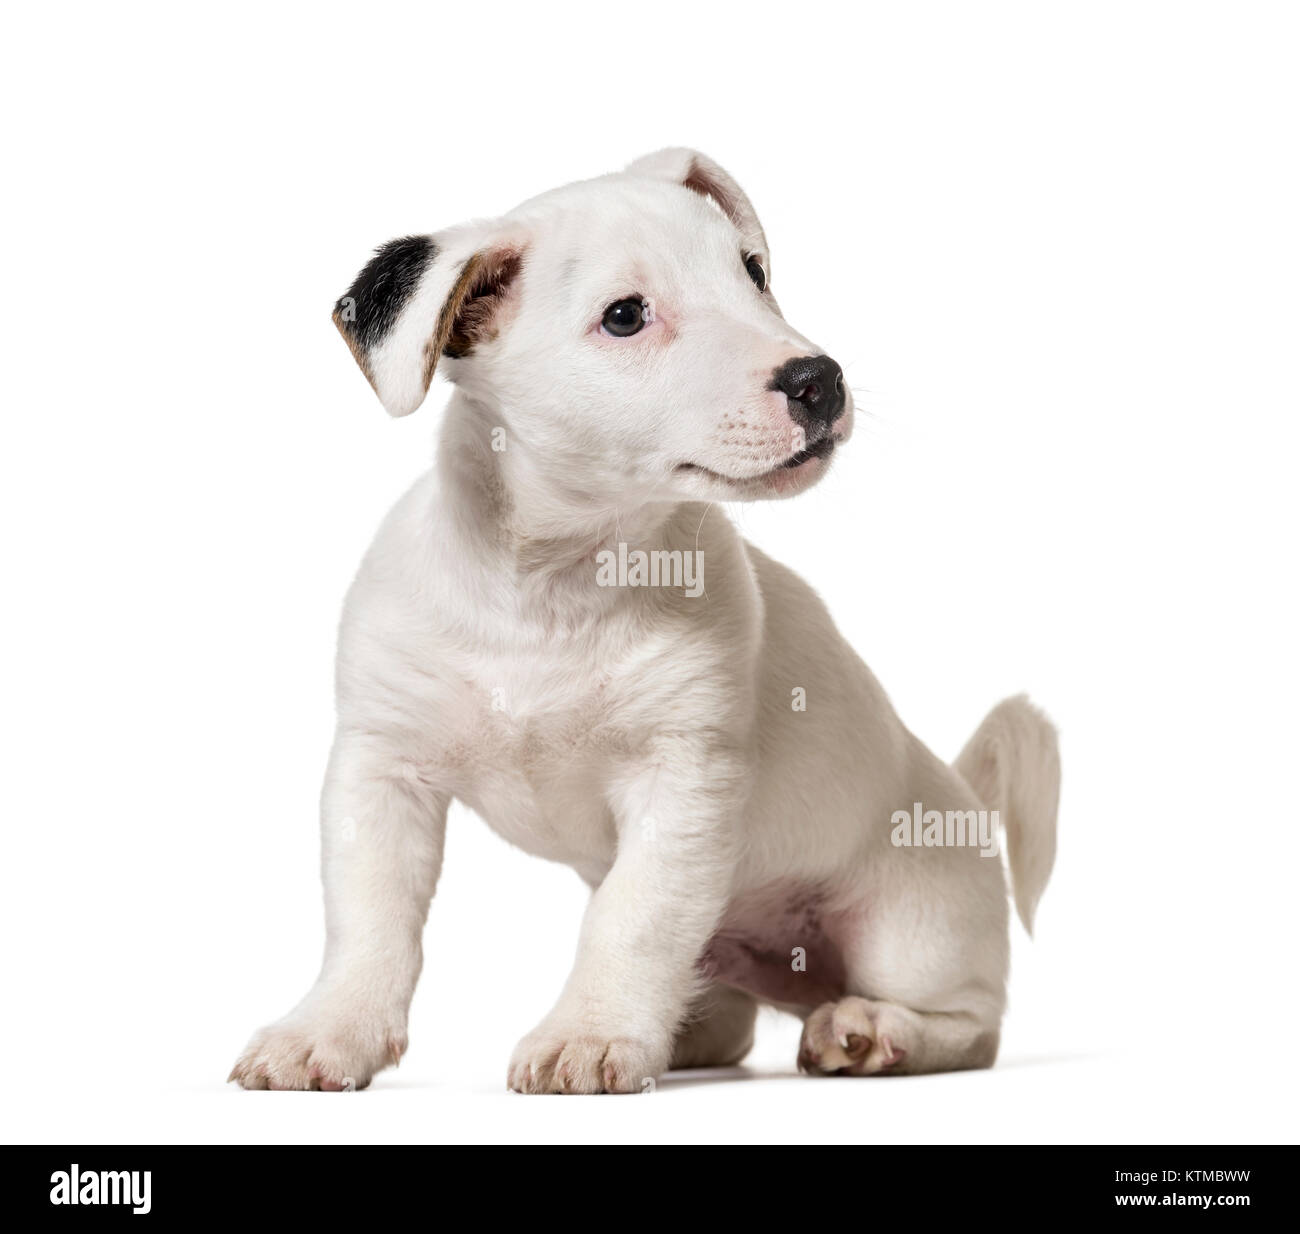 Cachorro 8 meses Imágenes recortadas de stock - Alamy